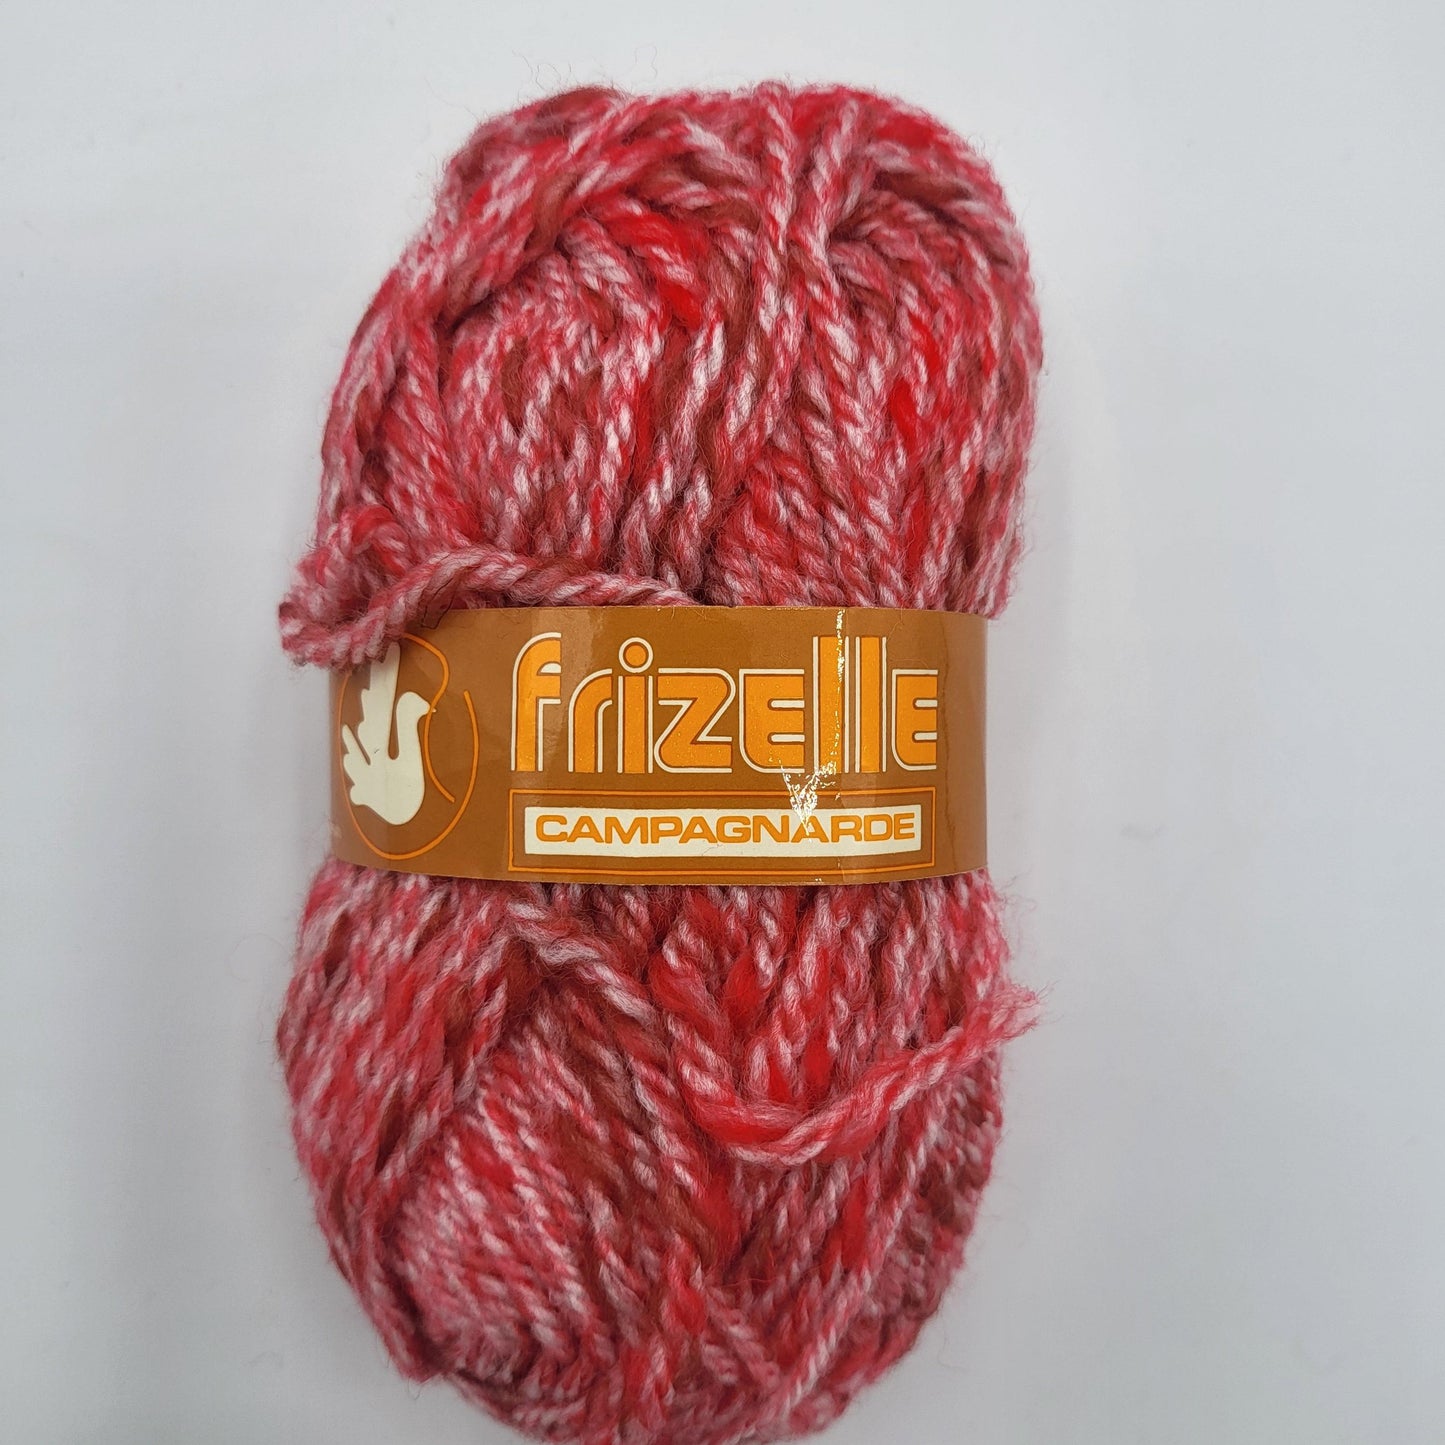 Frizelle Campagnarde Wolle 50gr ca. 70m aus Frankreich - EkoDeko.de